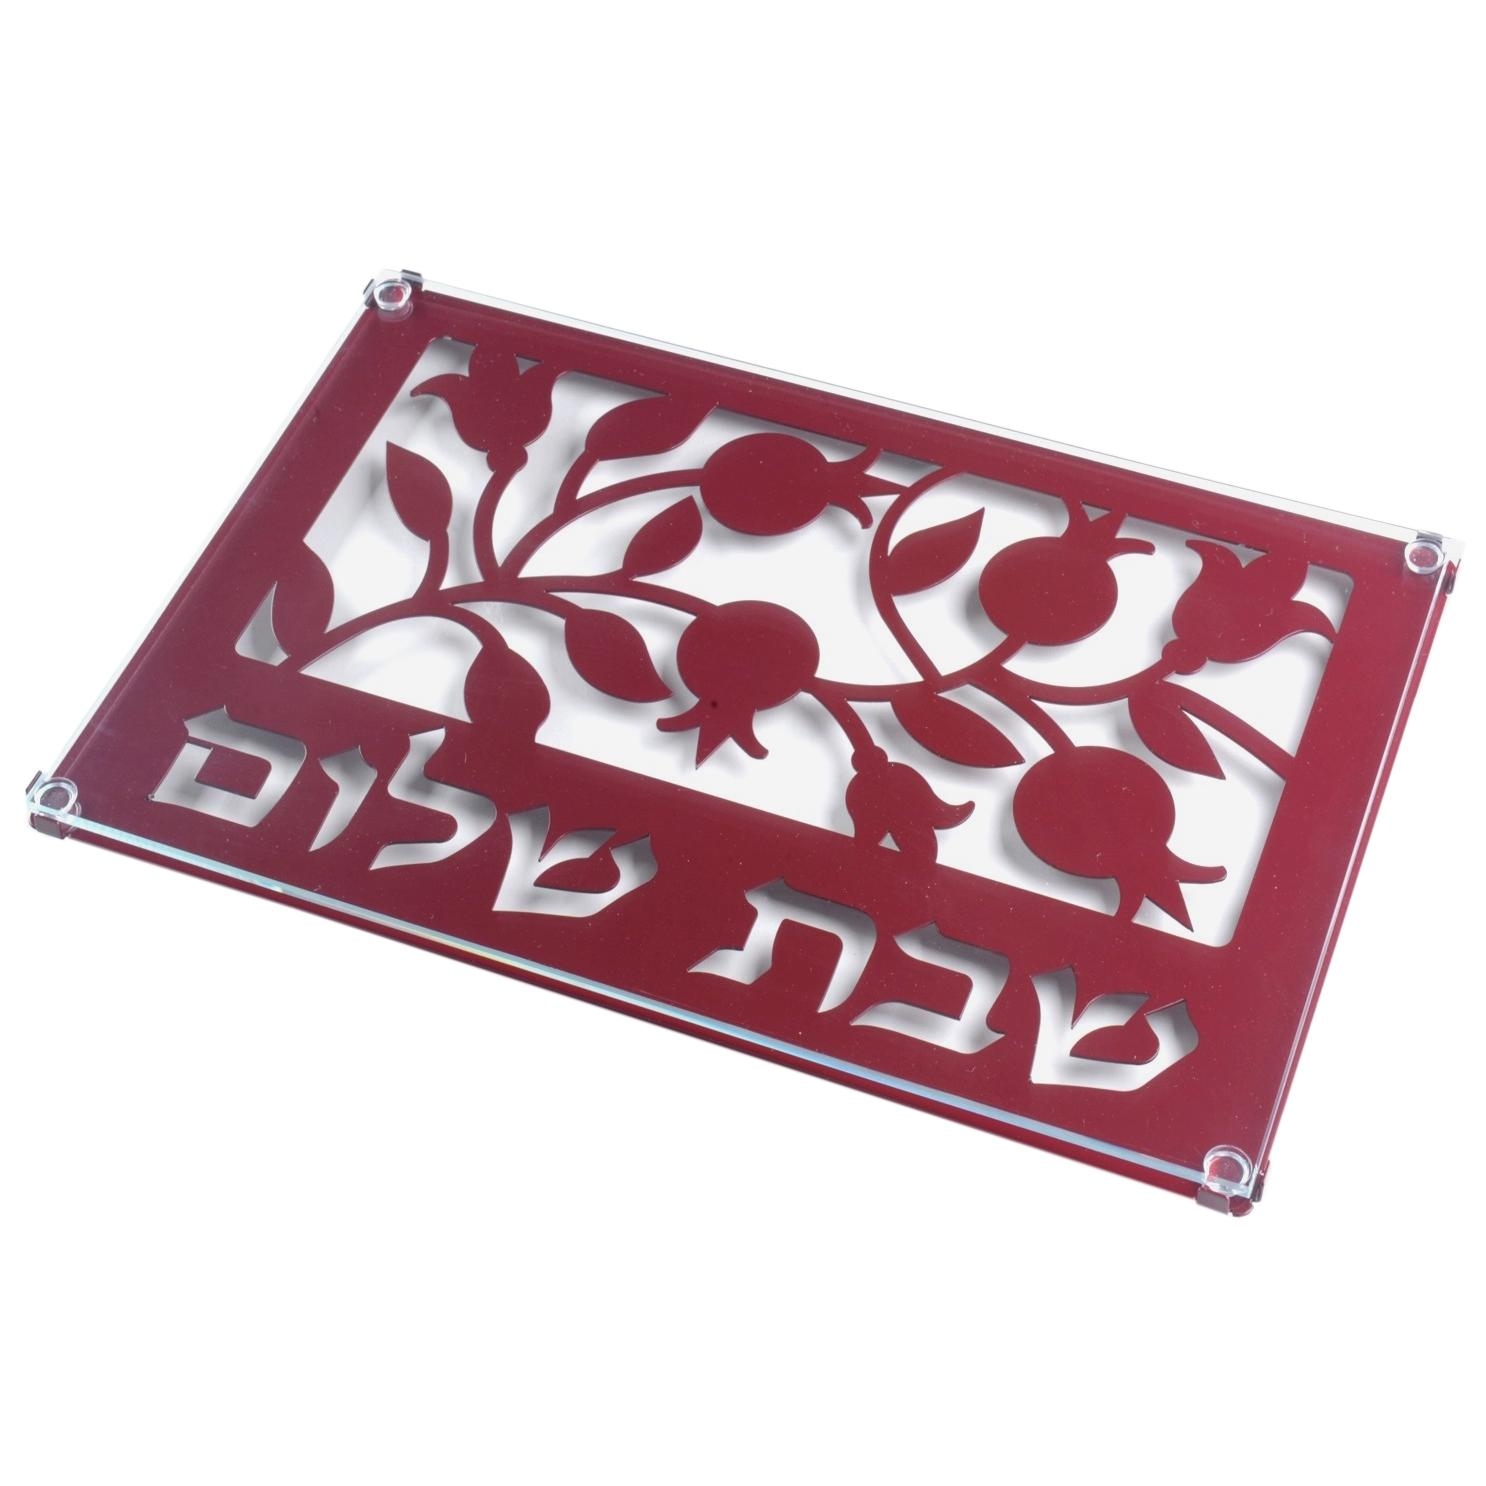 Dorit Judaica Stainless Steel & Glass Challah Board -  Pomegranates (Bordeaux) - 1